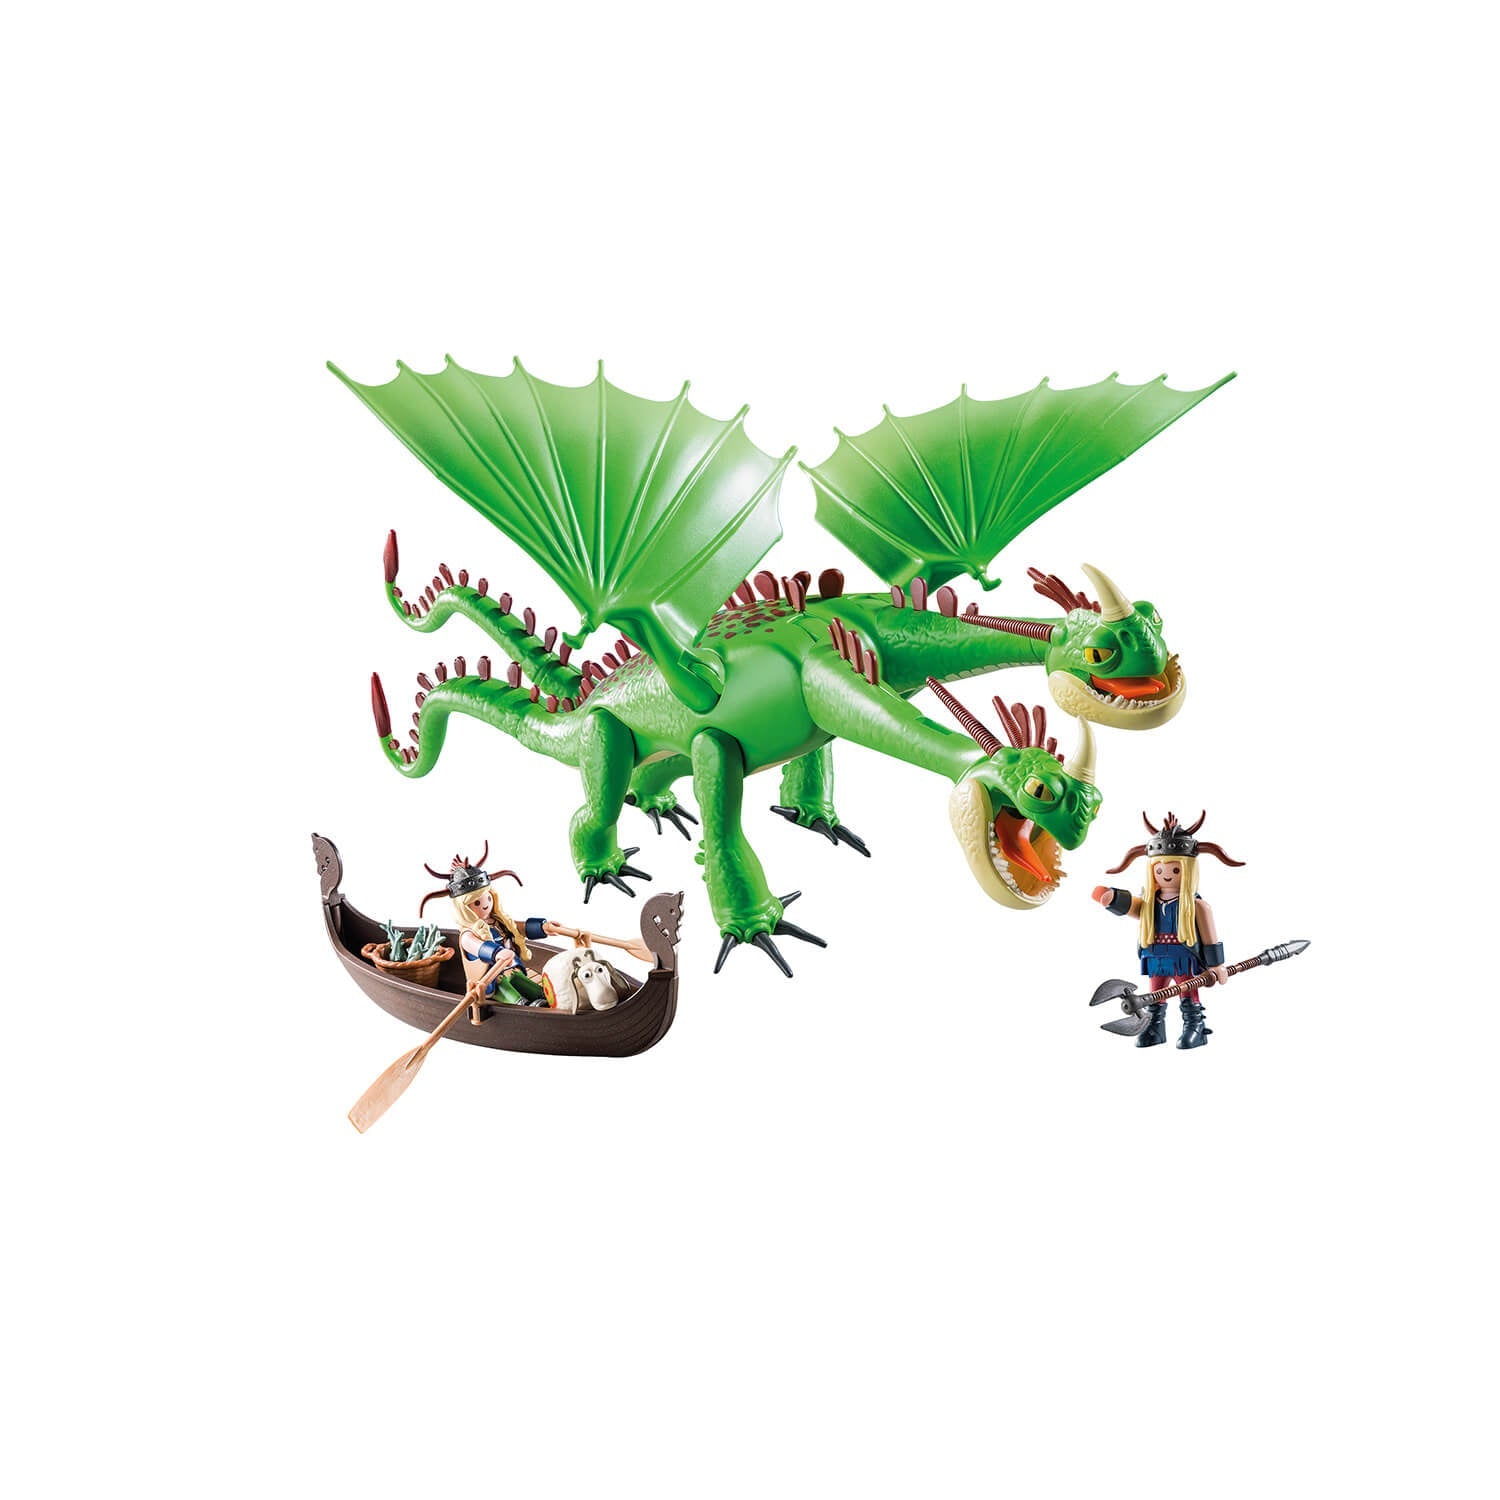 PLAYMOBIL DreamWorks Dragons II Ruffnut & Tuffnut w Barf Belch (9458)